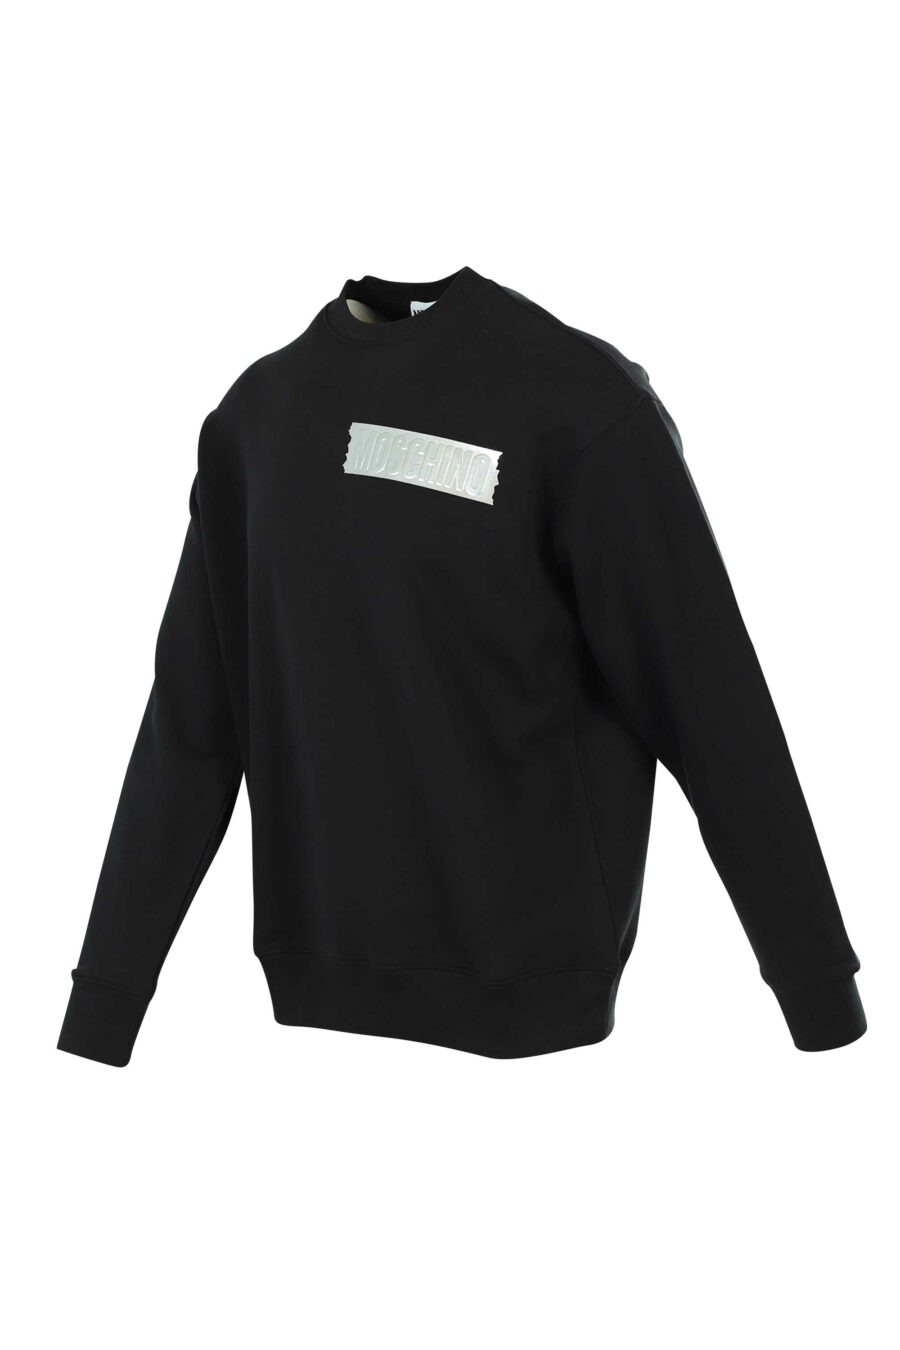 Schwarzes Sweatshirt mit silbernem Eifer-Effekt-Logo - 889316179569 2